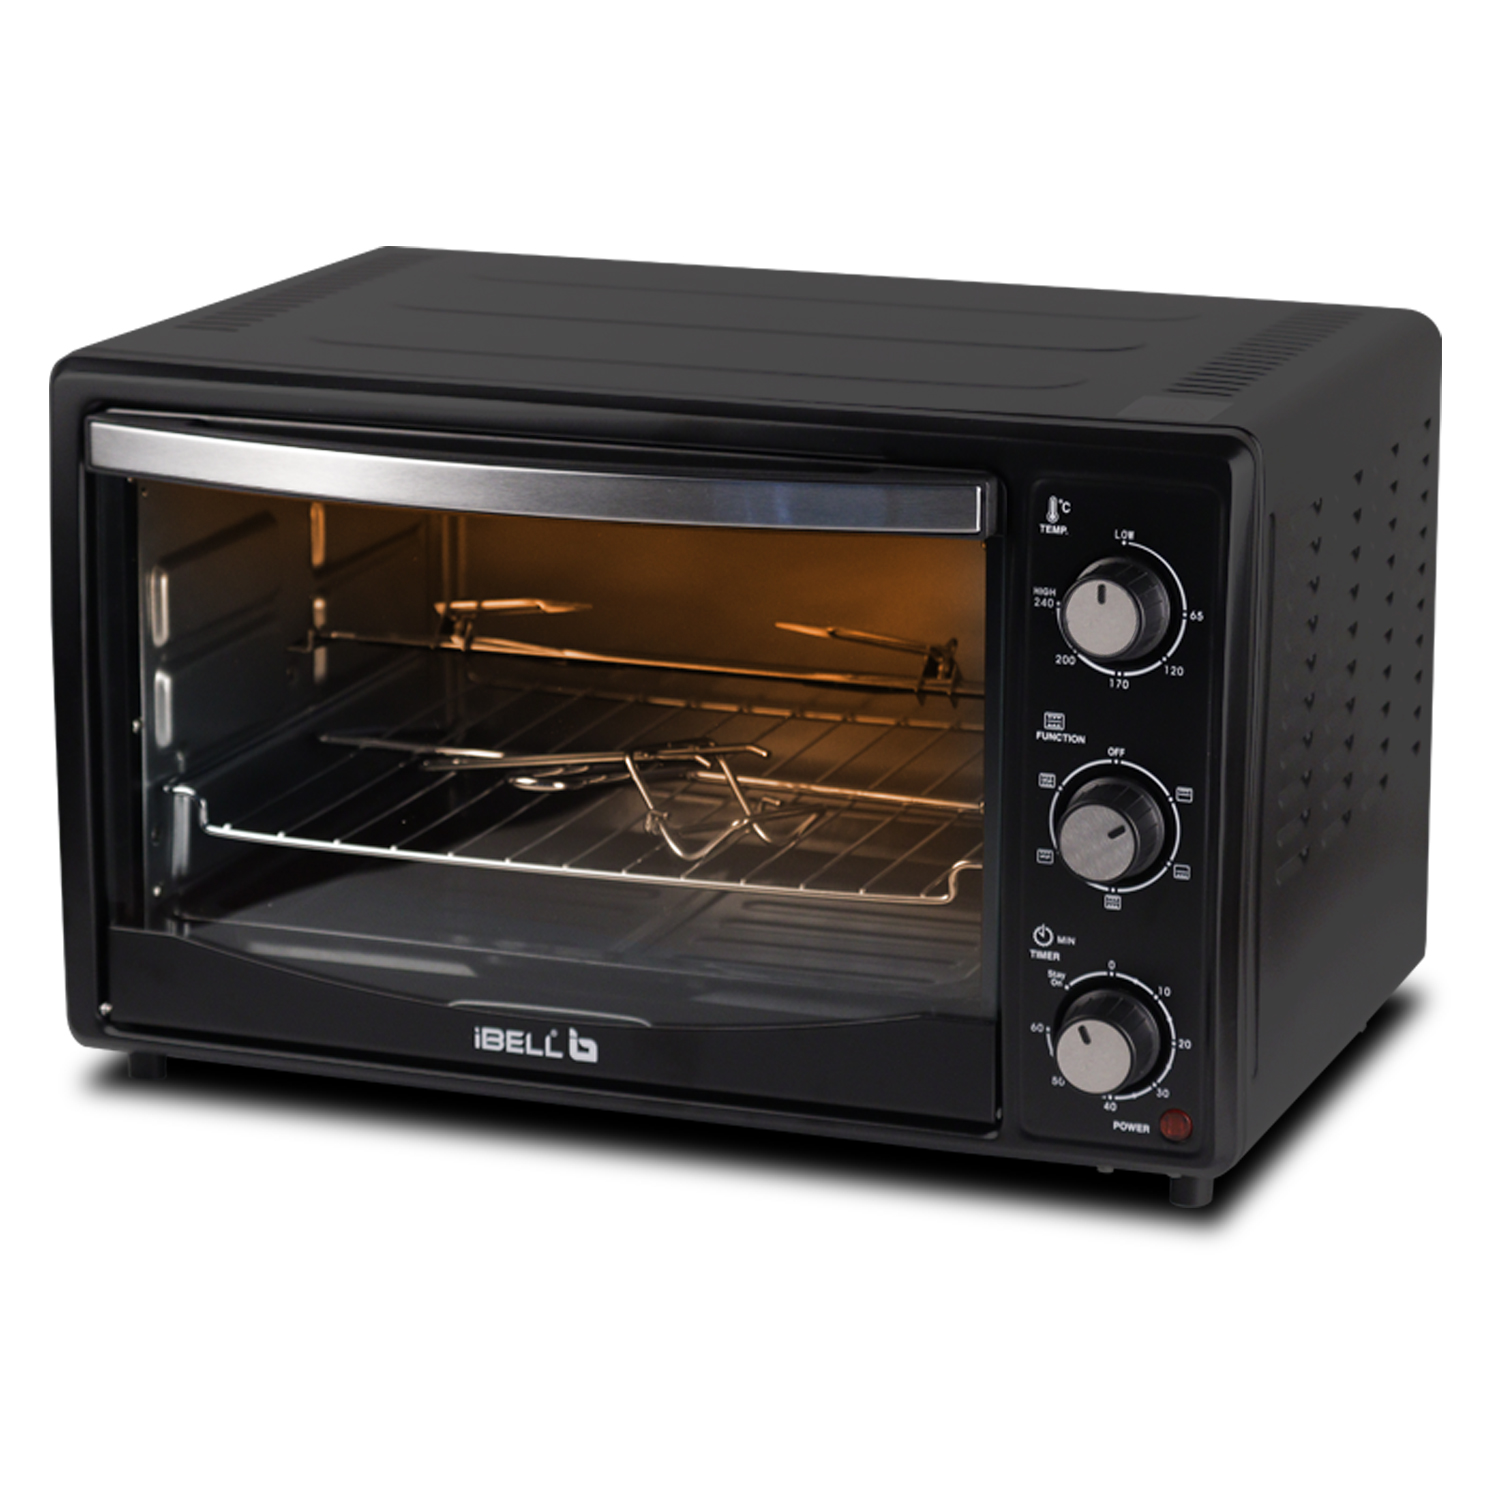 Ibell eo500g otg 50 litre convection oven toaster griller with motorized  rotisserie 2000 watt 6 heating modes black